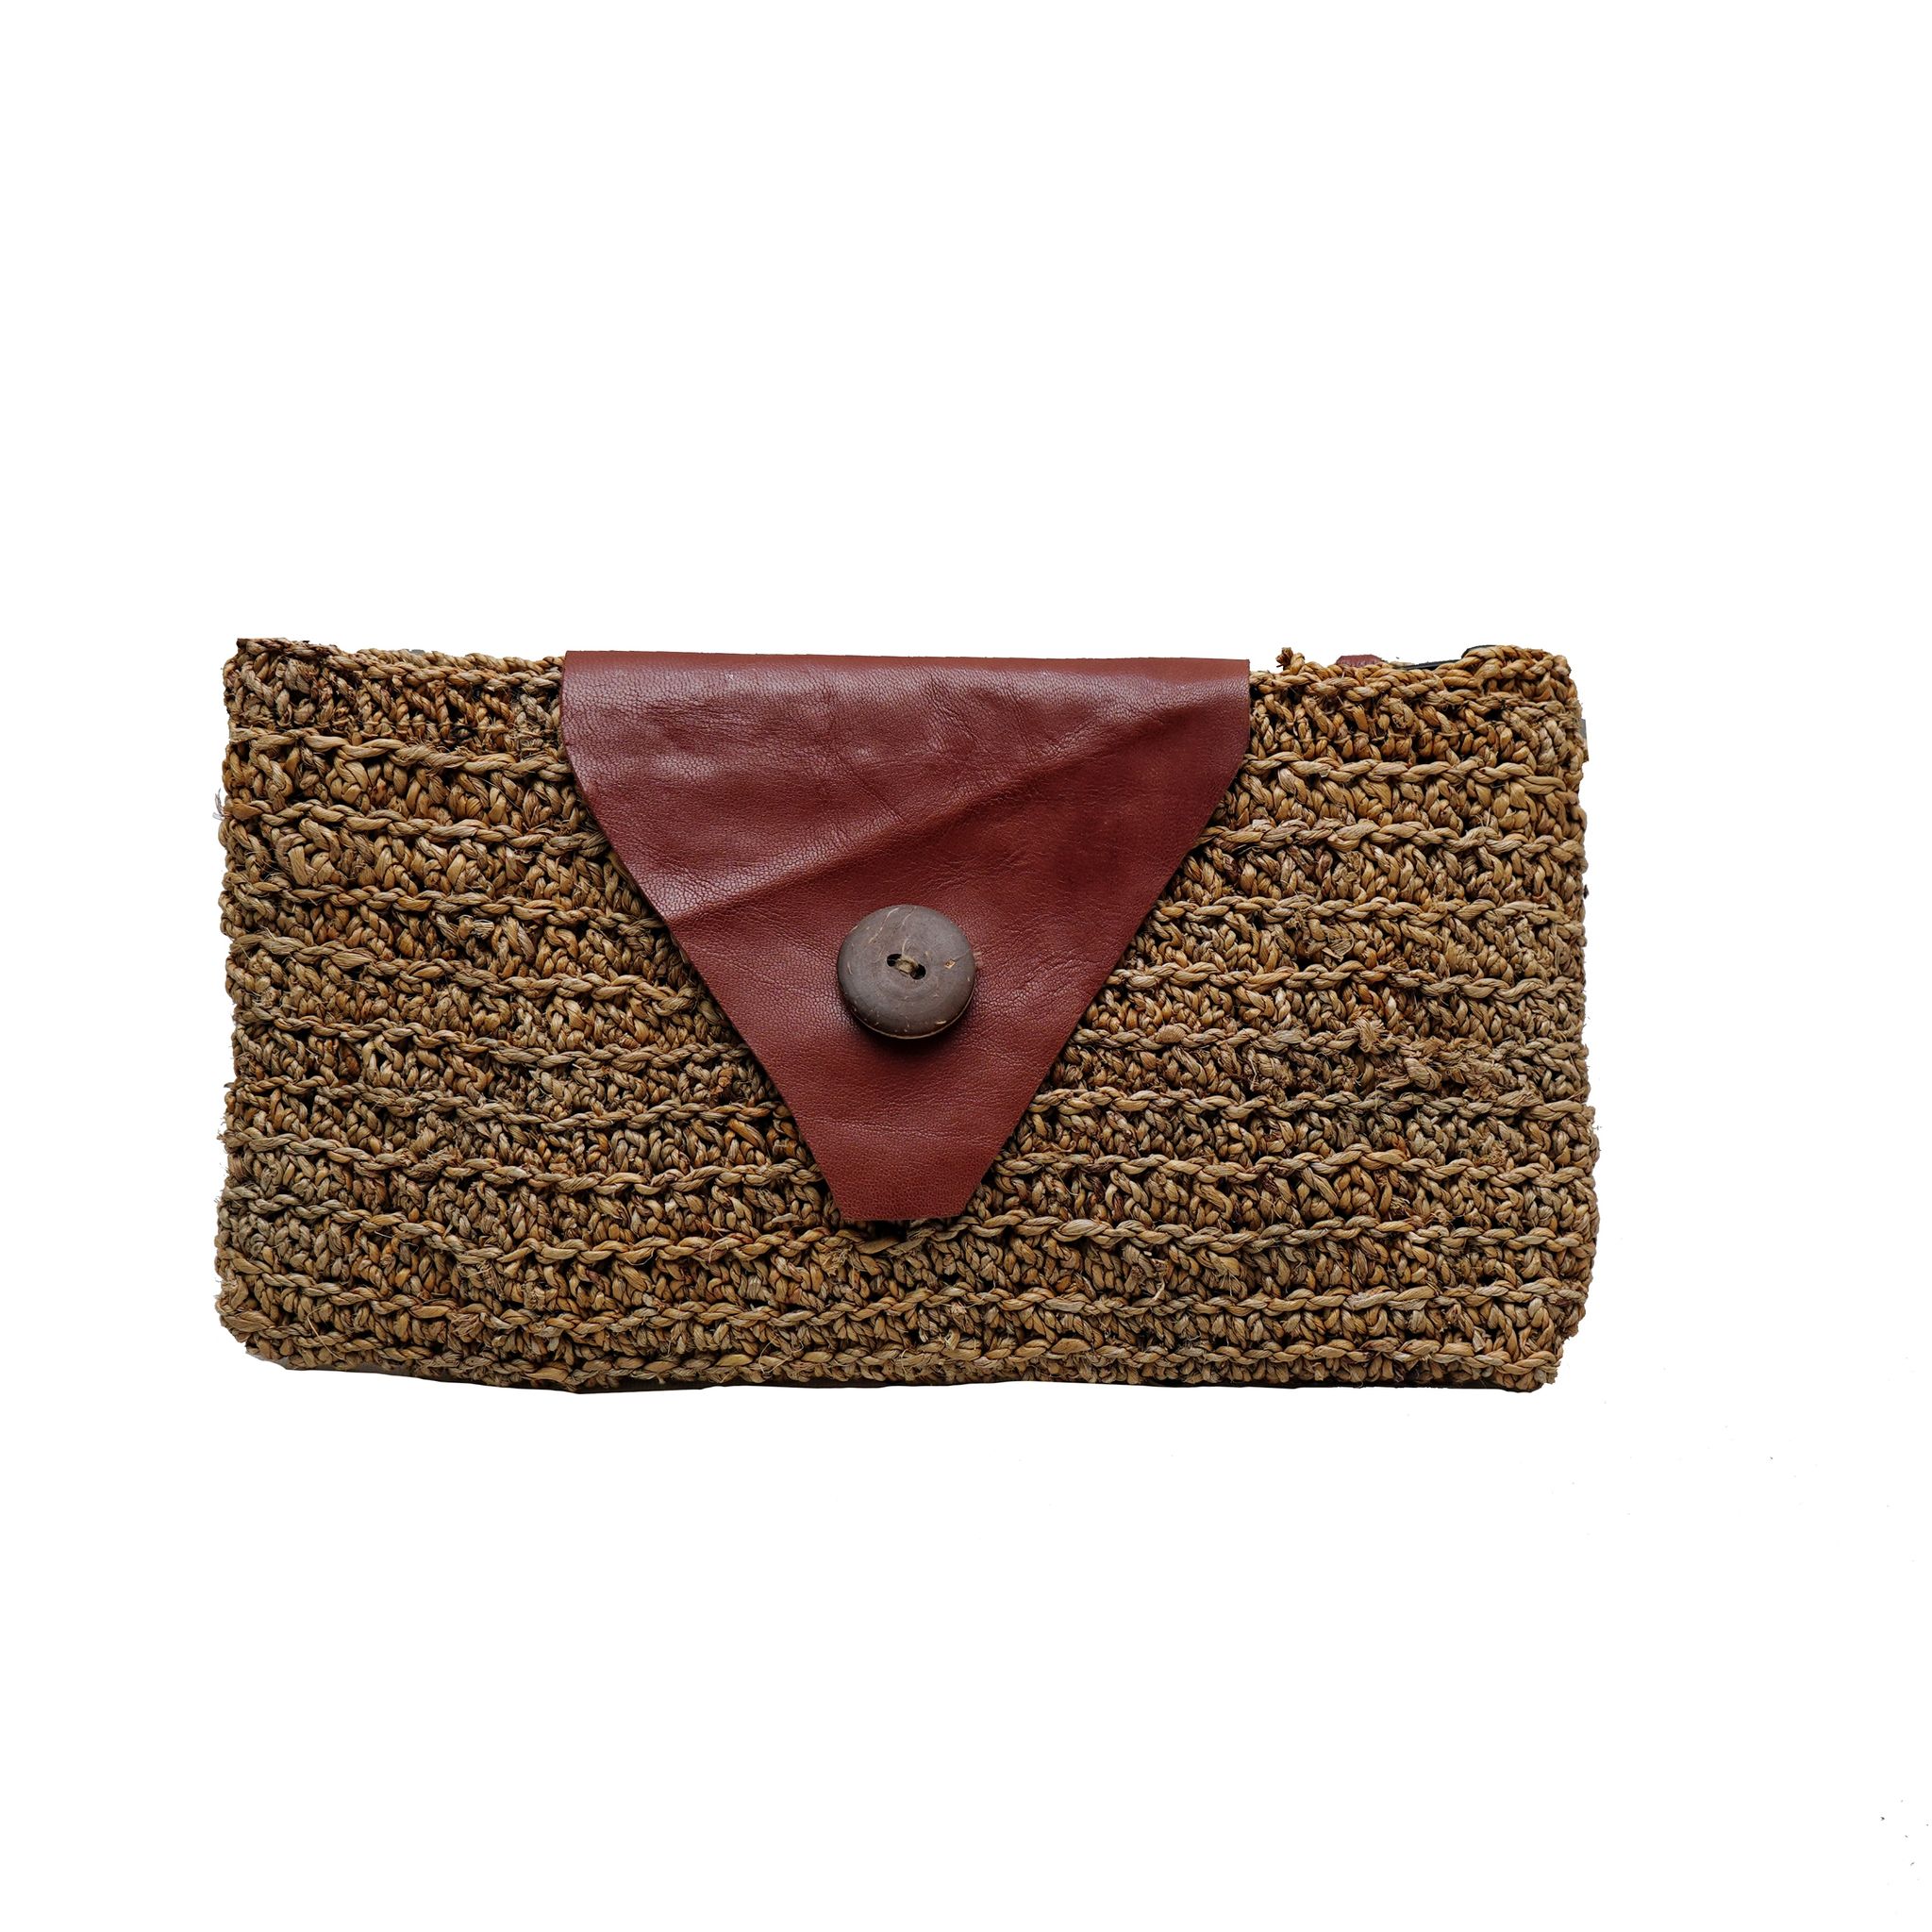 आसान तरीका हैंड बैग बनाने का ll DIY handbag/shoppingbag. easy method | Diy  bag designs, Diy travel bag, Diy handbag